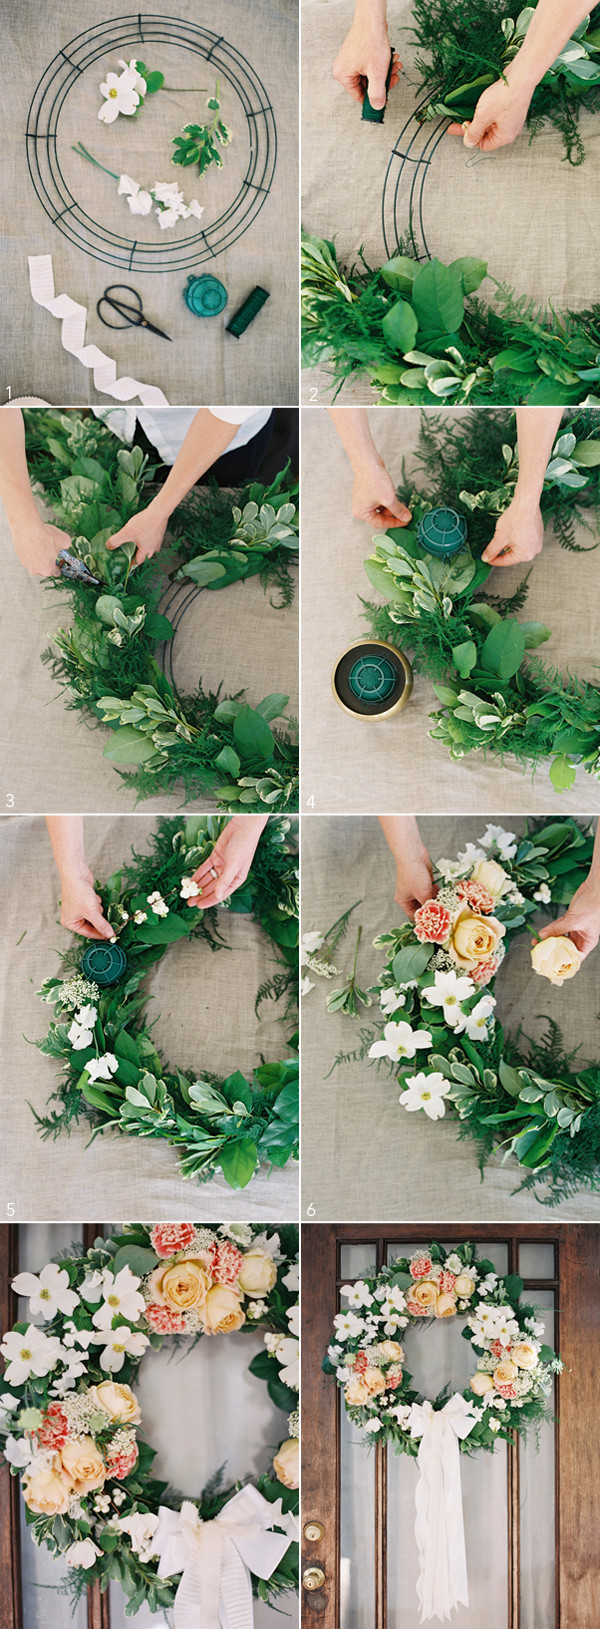 Best ideas about Wedding DIY Decor
. Save or Pin DIY Wedding Wreath ce Wed Now.